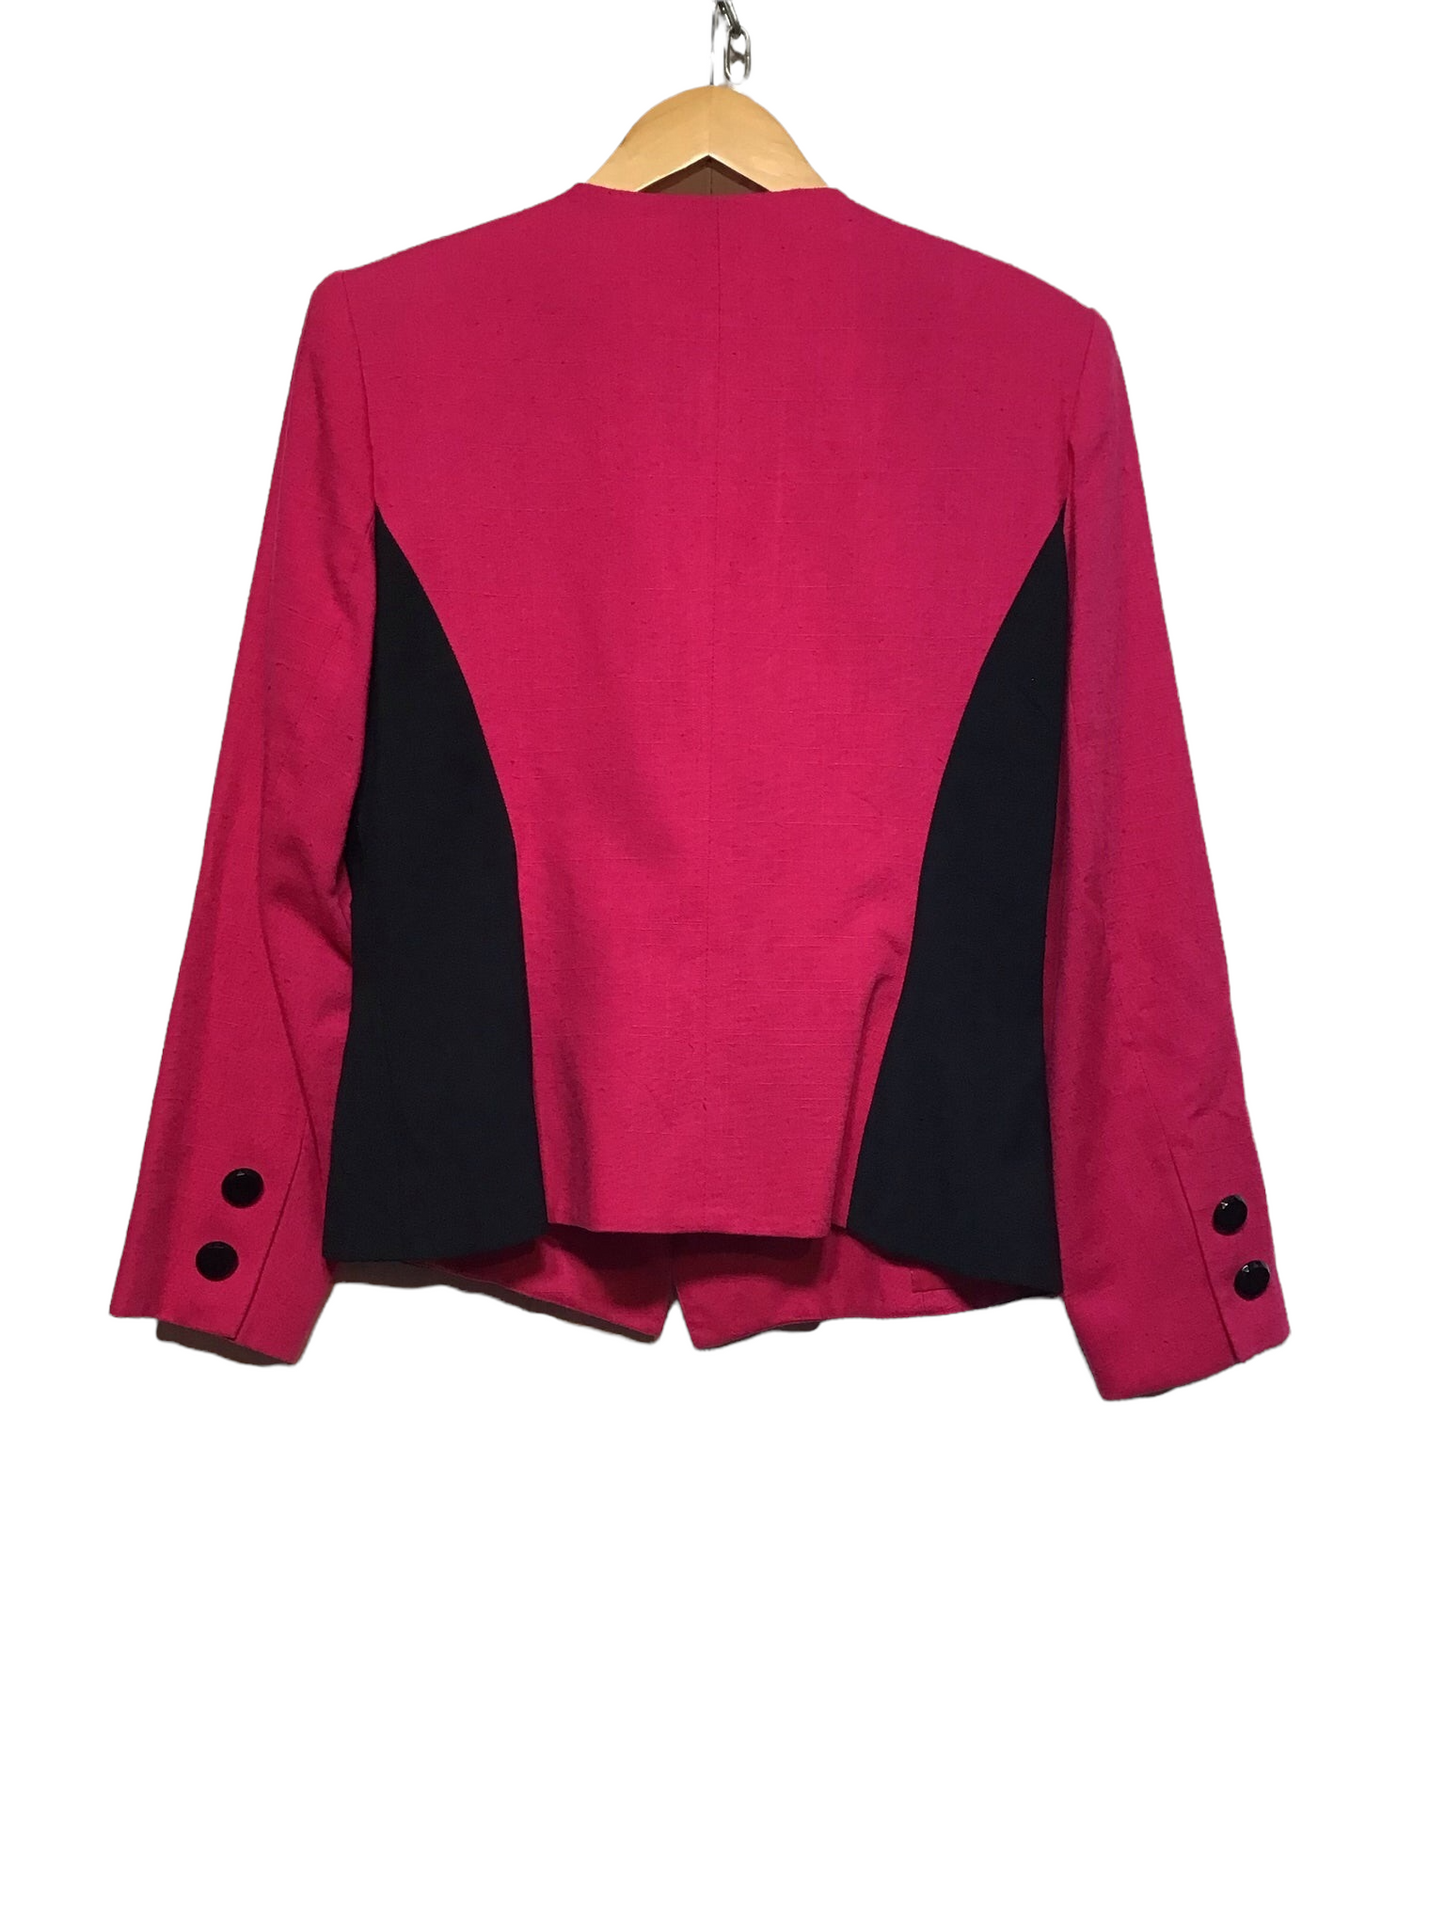 Pink And Black Blazer/Jacket (Size M)